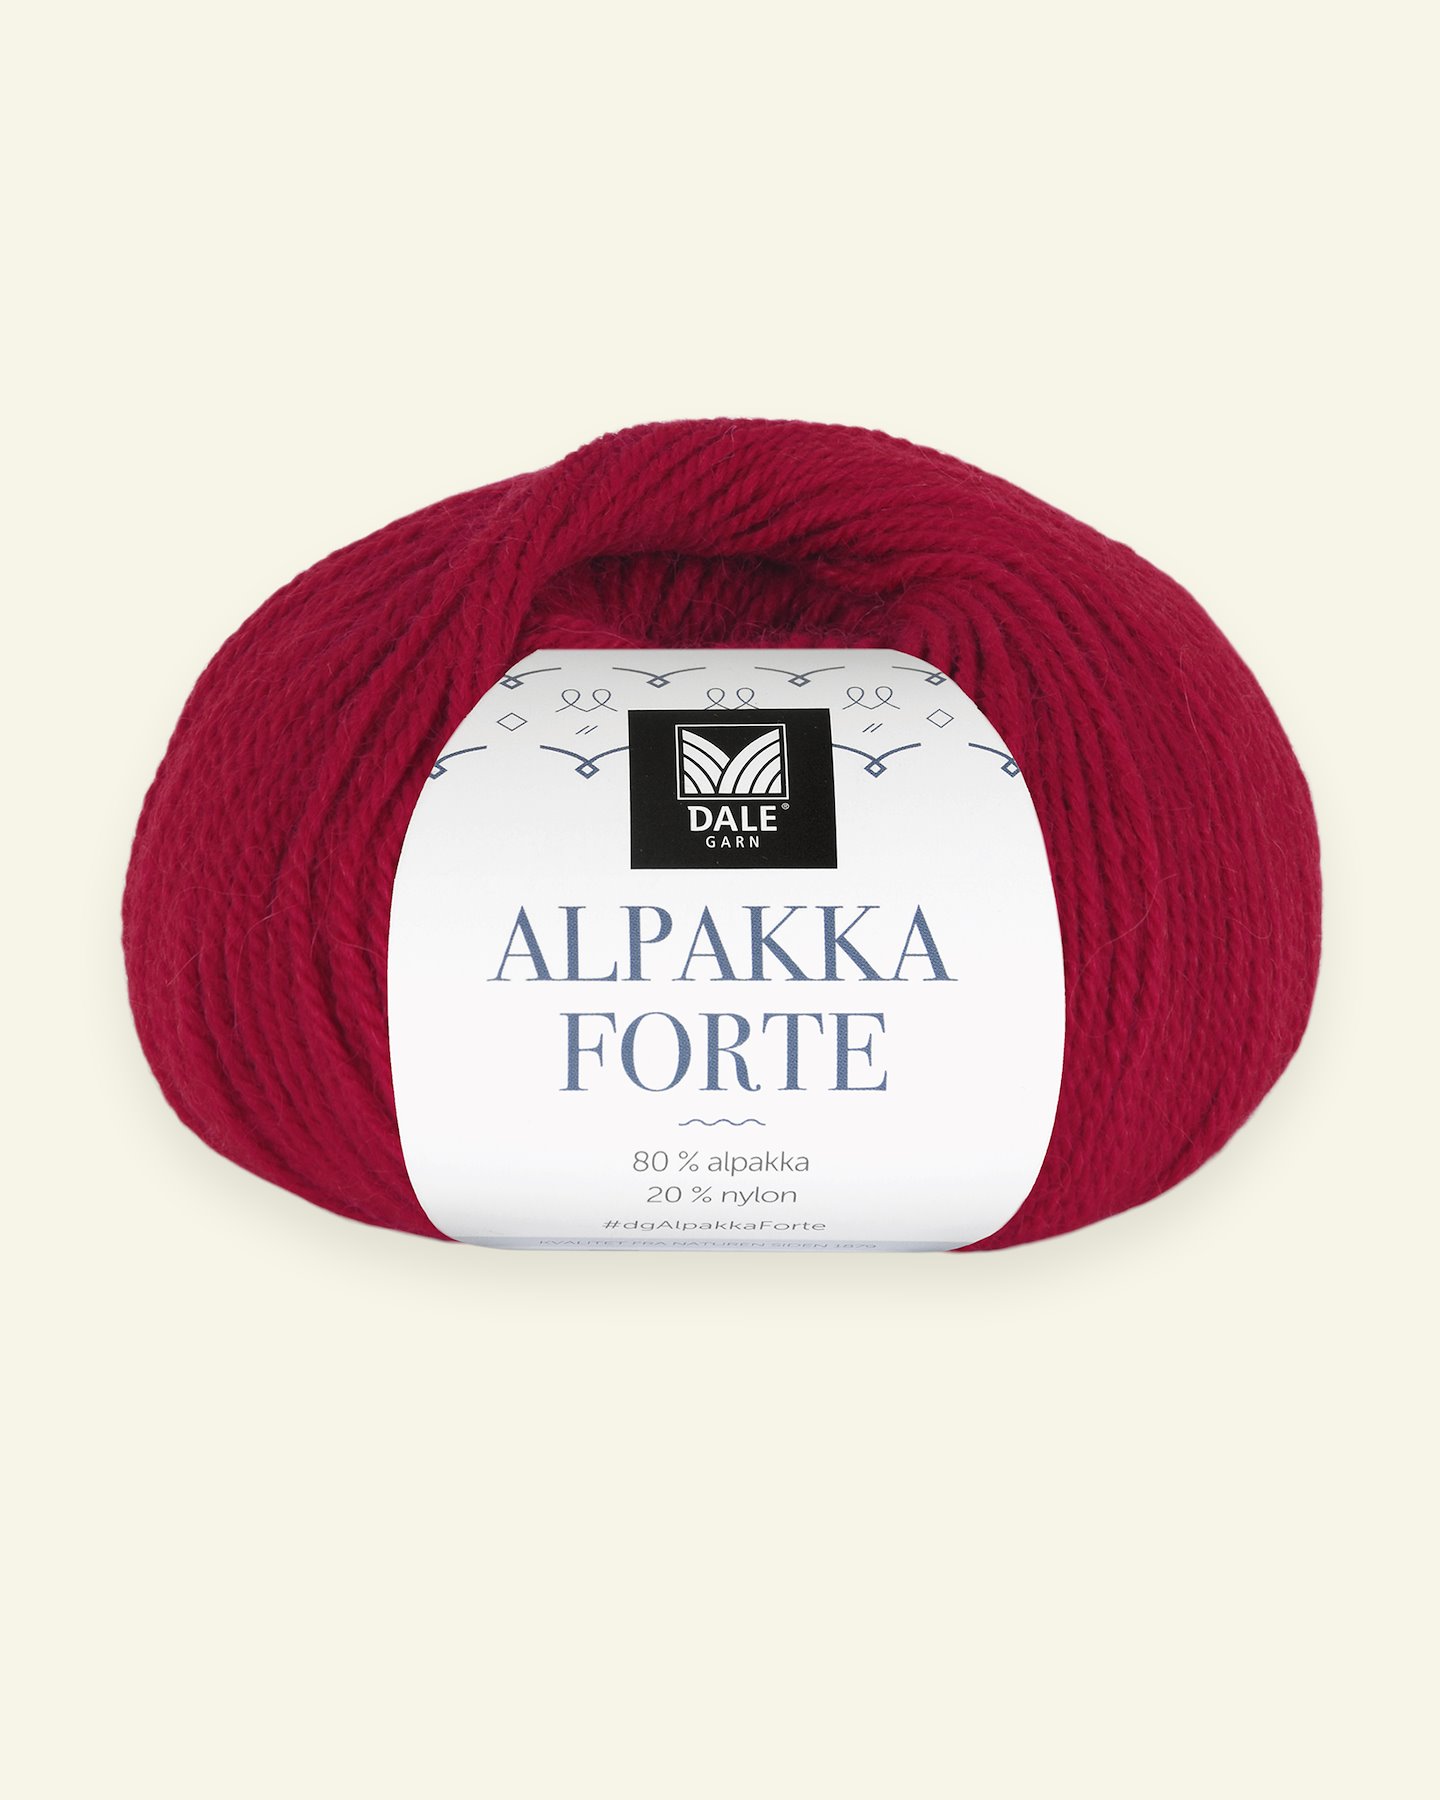 Dale Garn, alpackagarn "Alpakka Forte", röd (739) 90000462_pack